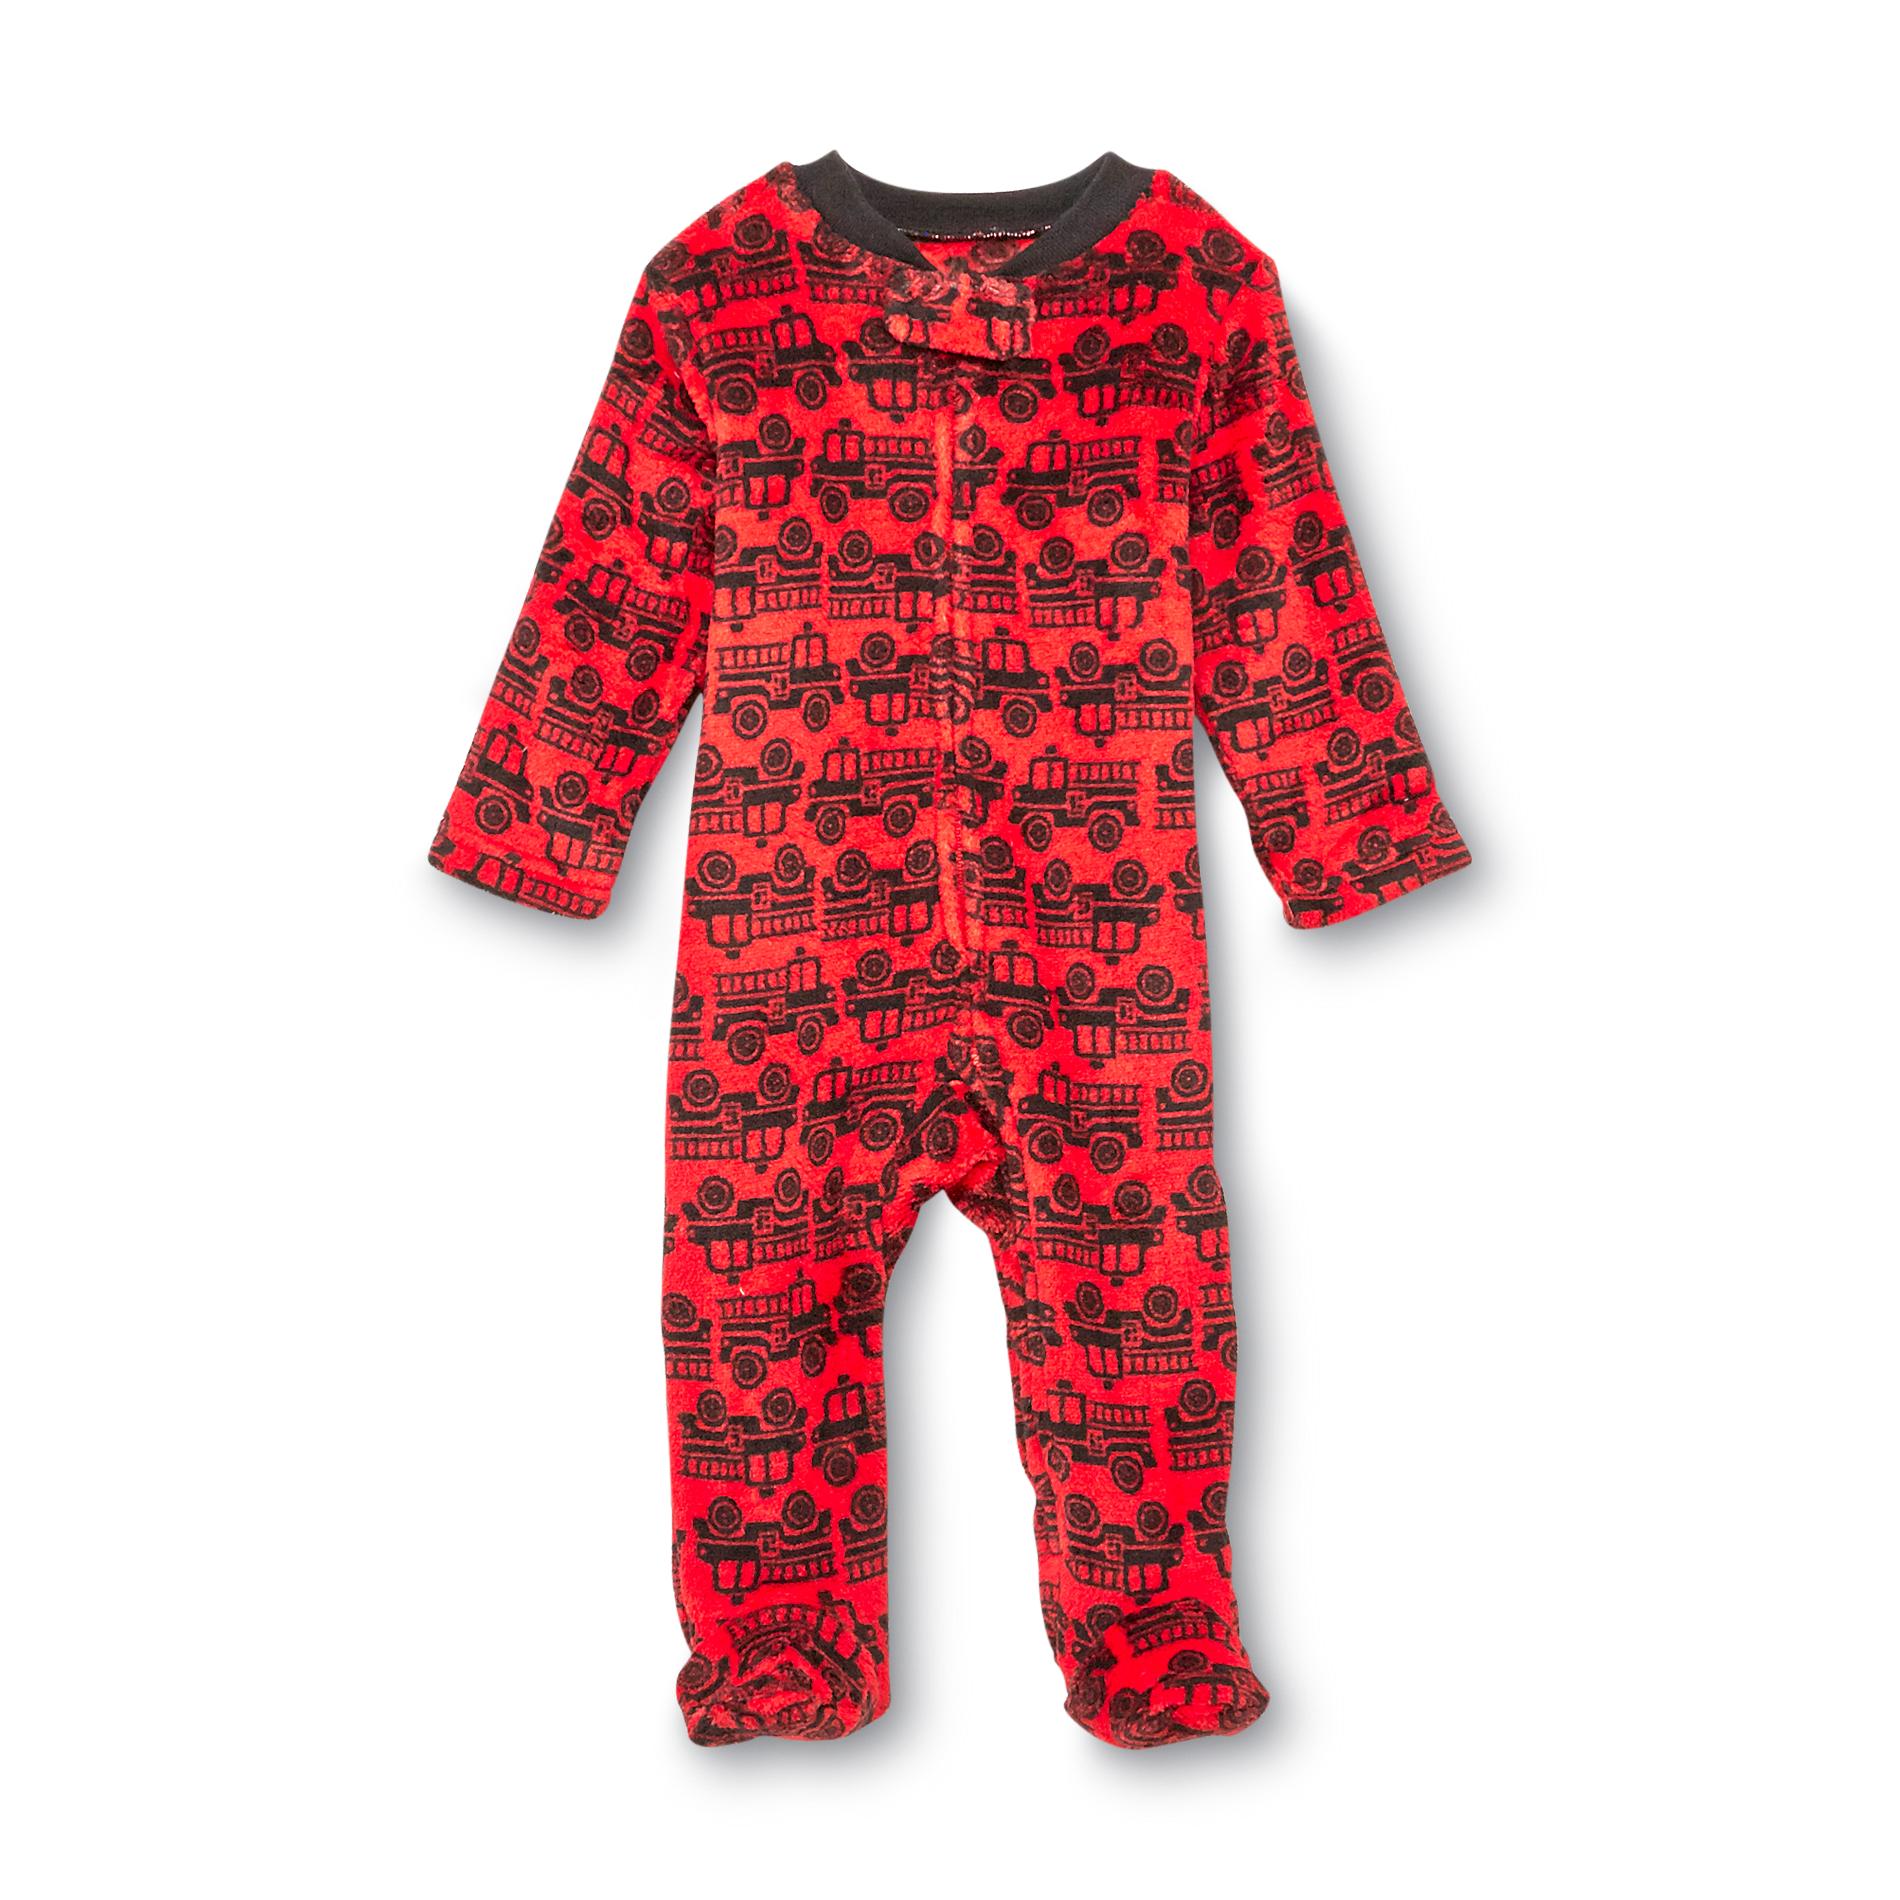 Small Wonders Newborn Boy's Footed Sleeper Pajamas - Firetrucks